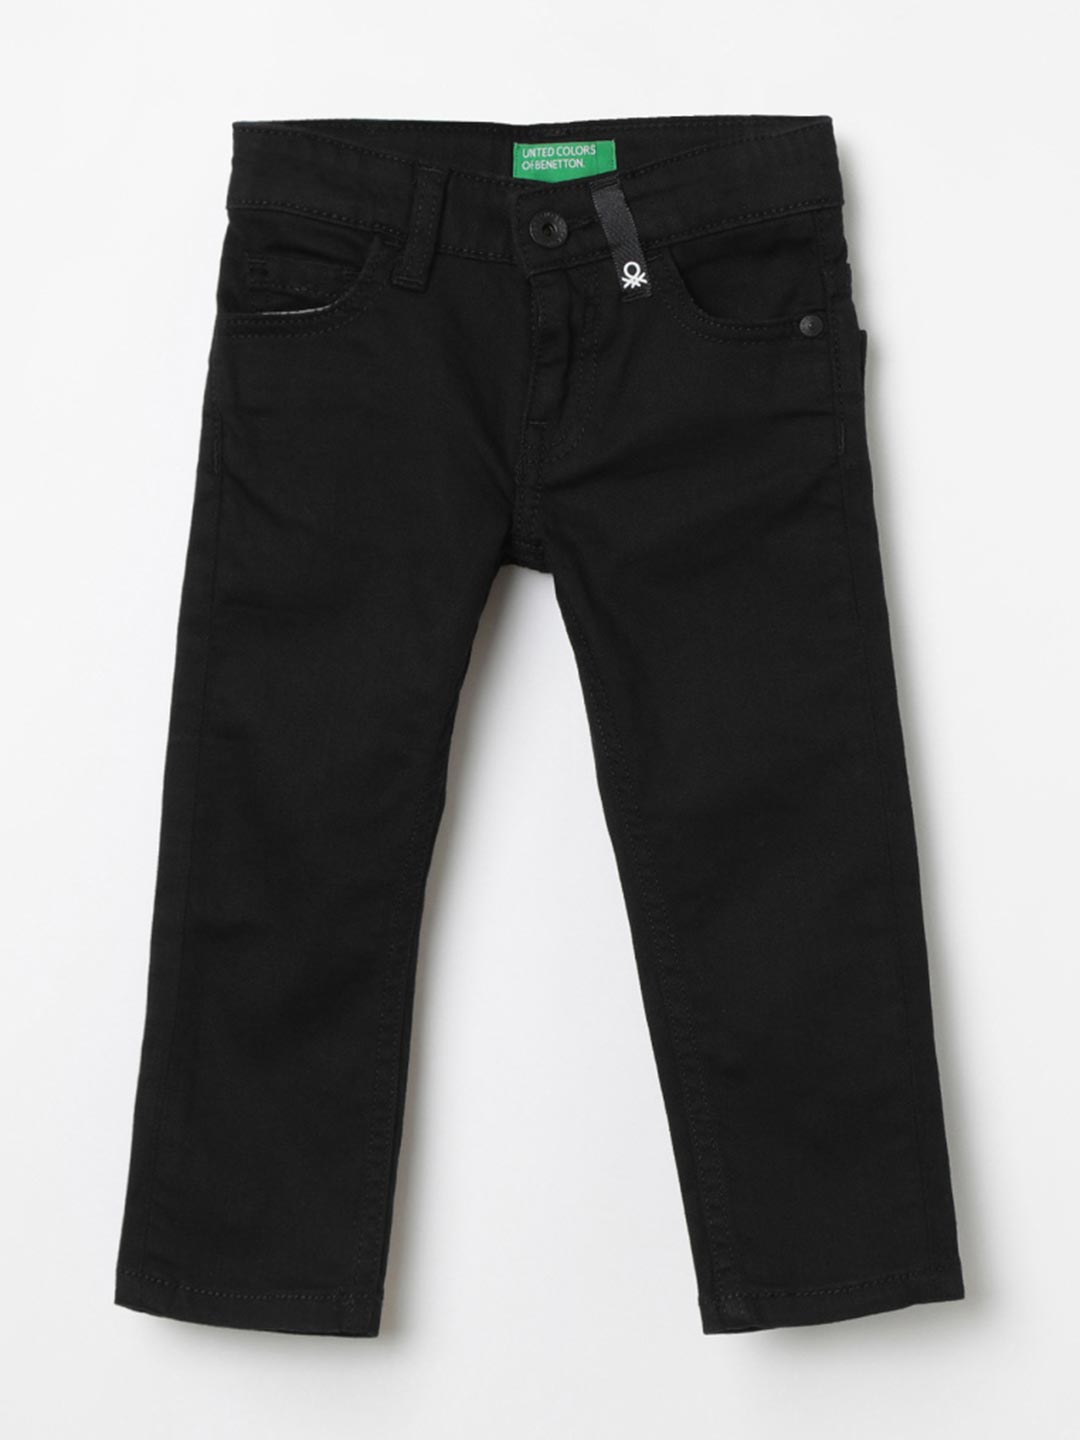 benetton black jeans